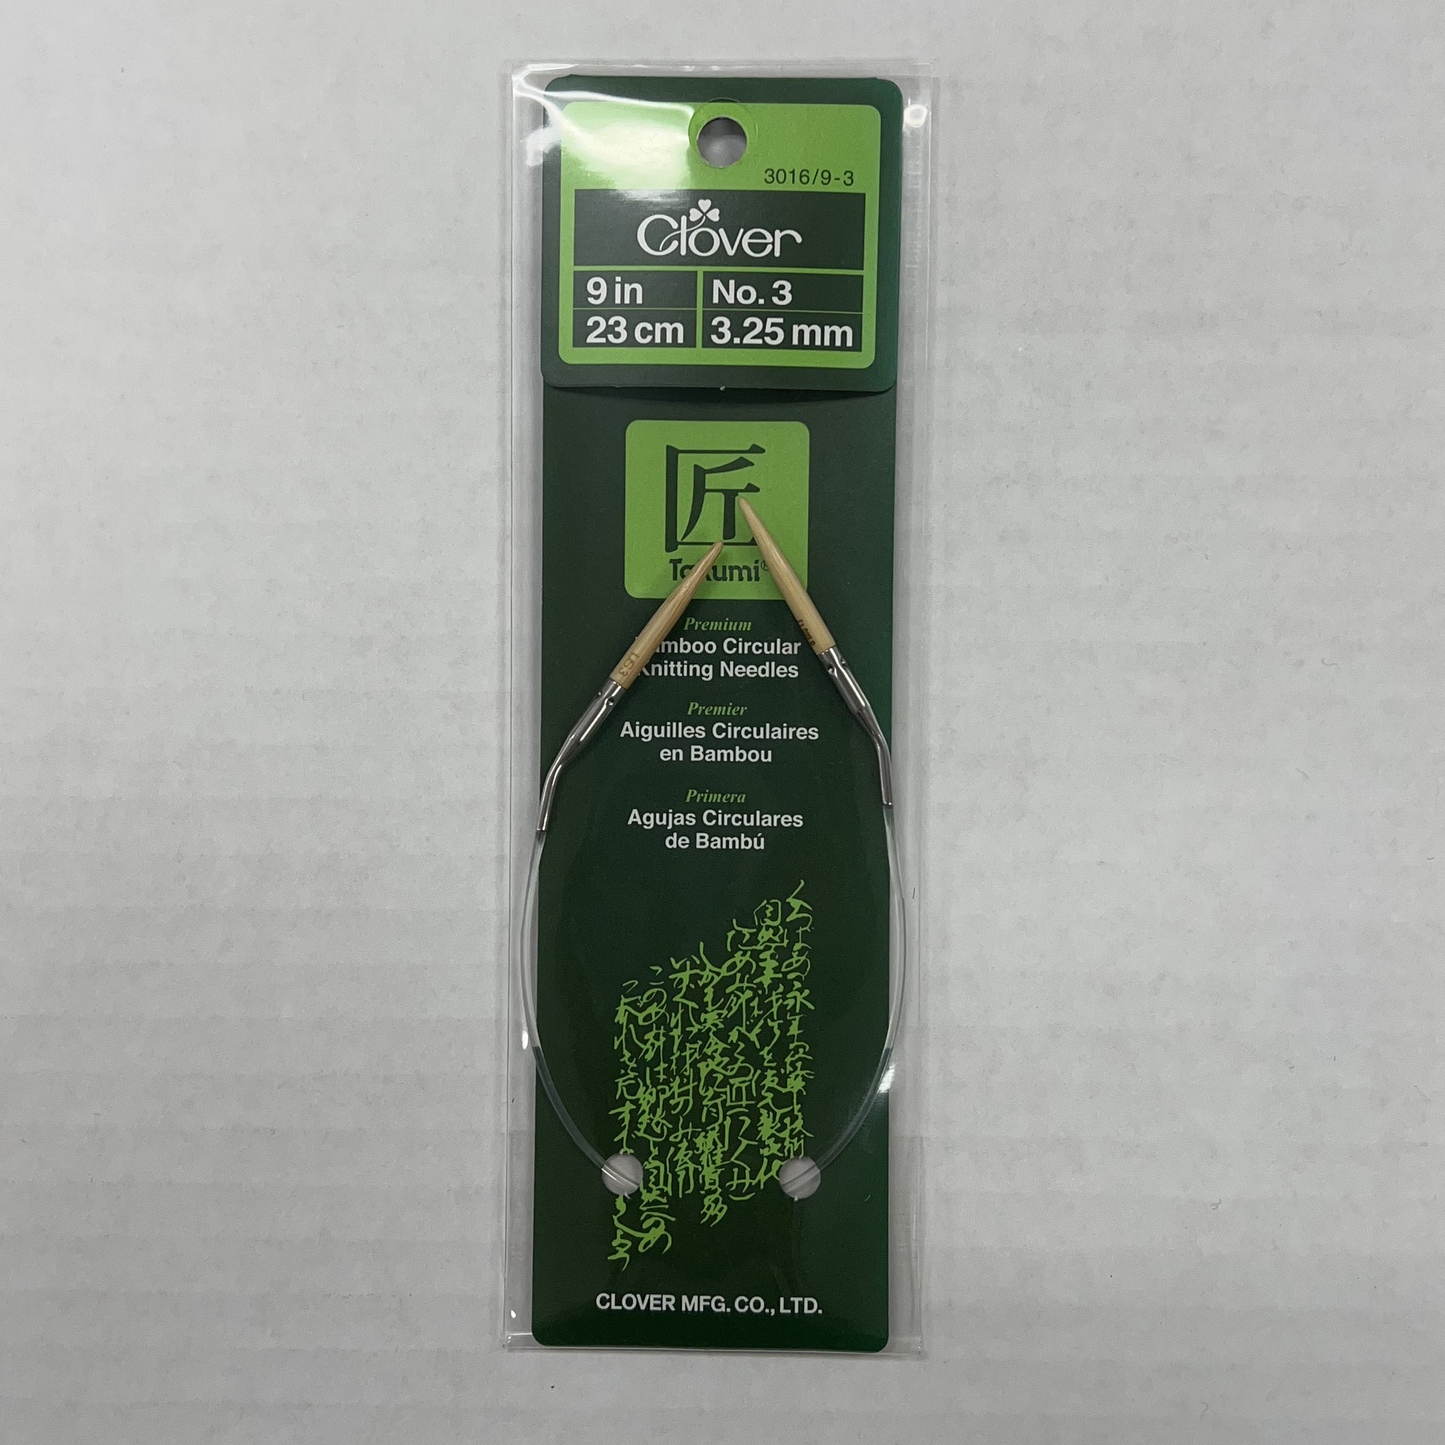 Clover - Takumi Bamboo - US 3 / 2.25mm Fixed Circular Needles